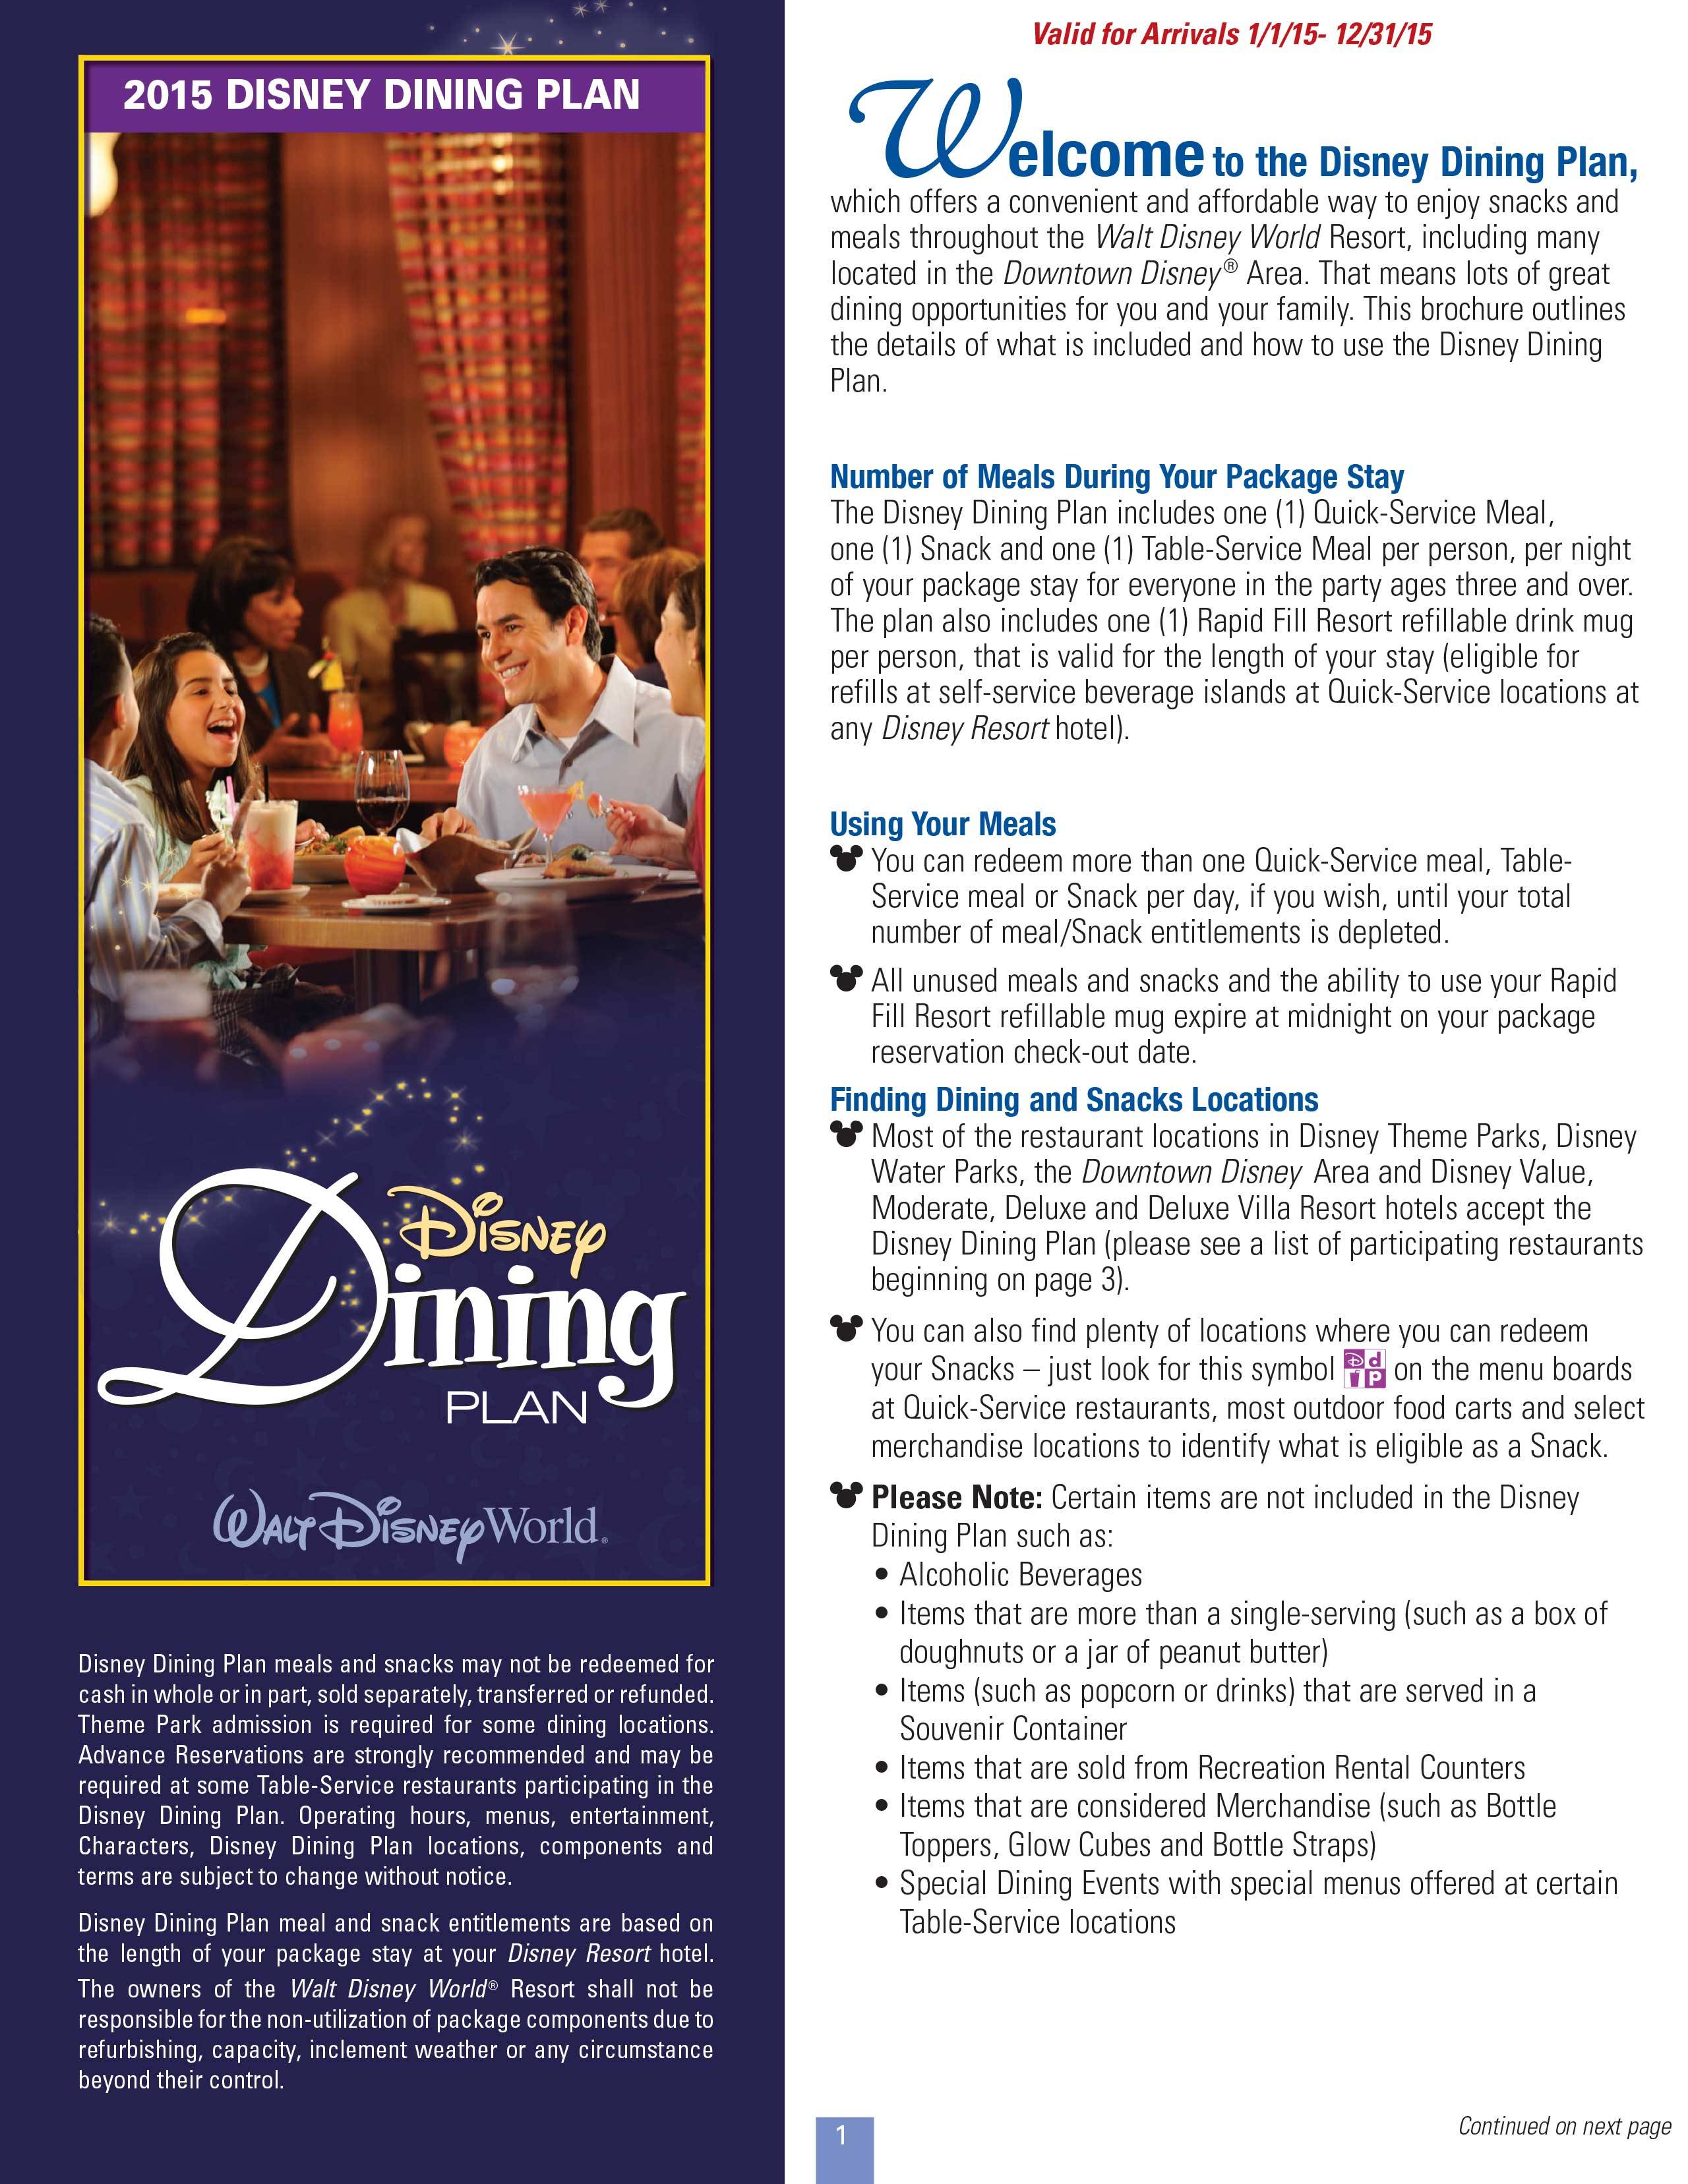 2015 Disney Dining Plan brochure - Page 1